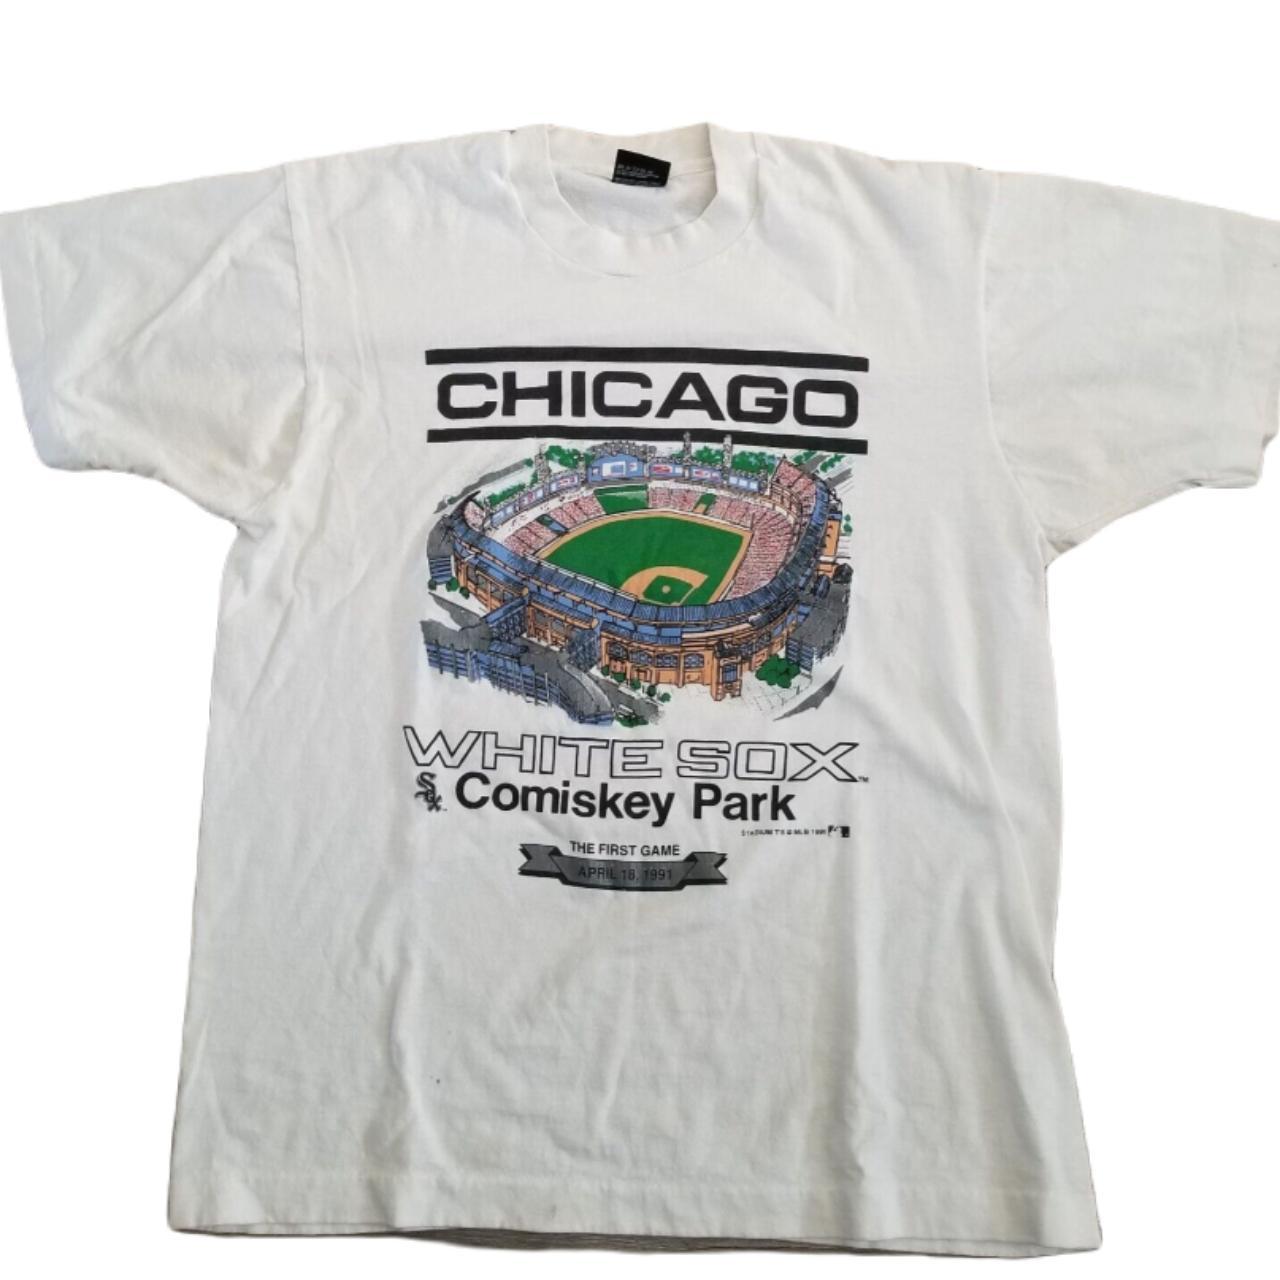 comiskey park t shirt